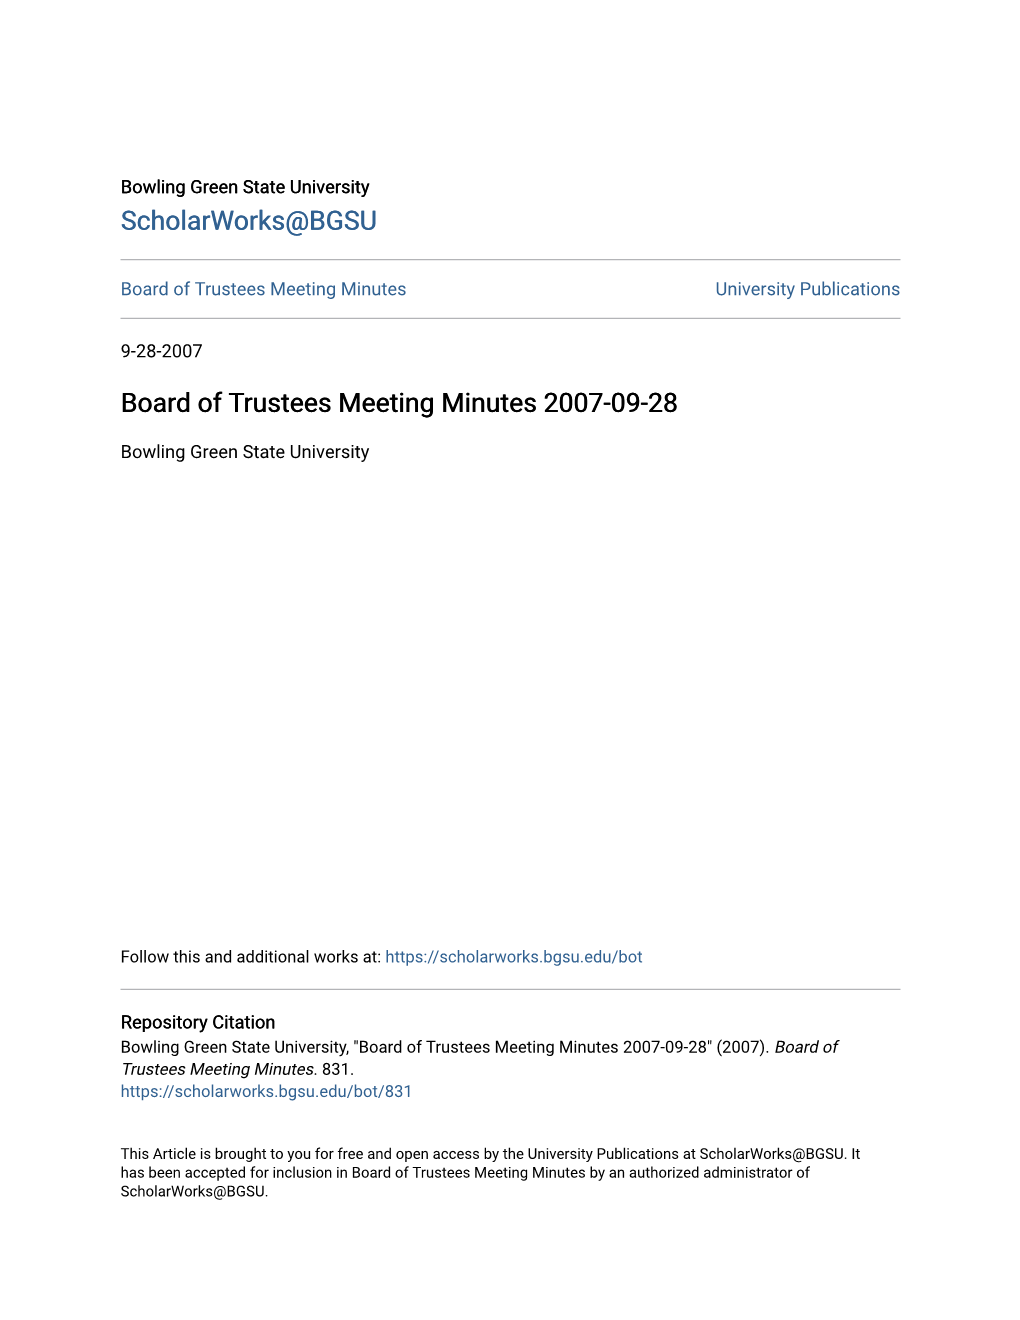 Board of Trustees Meeting Minutes 2007-09-28